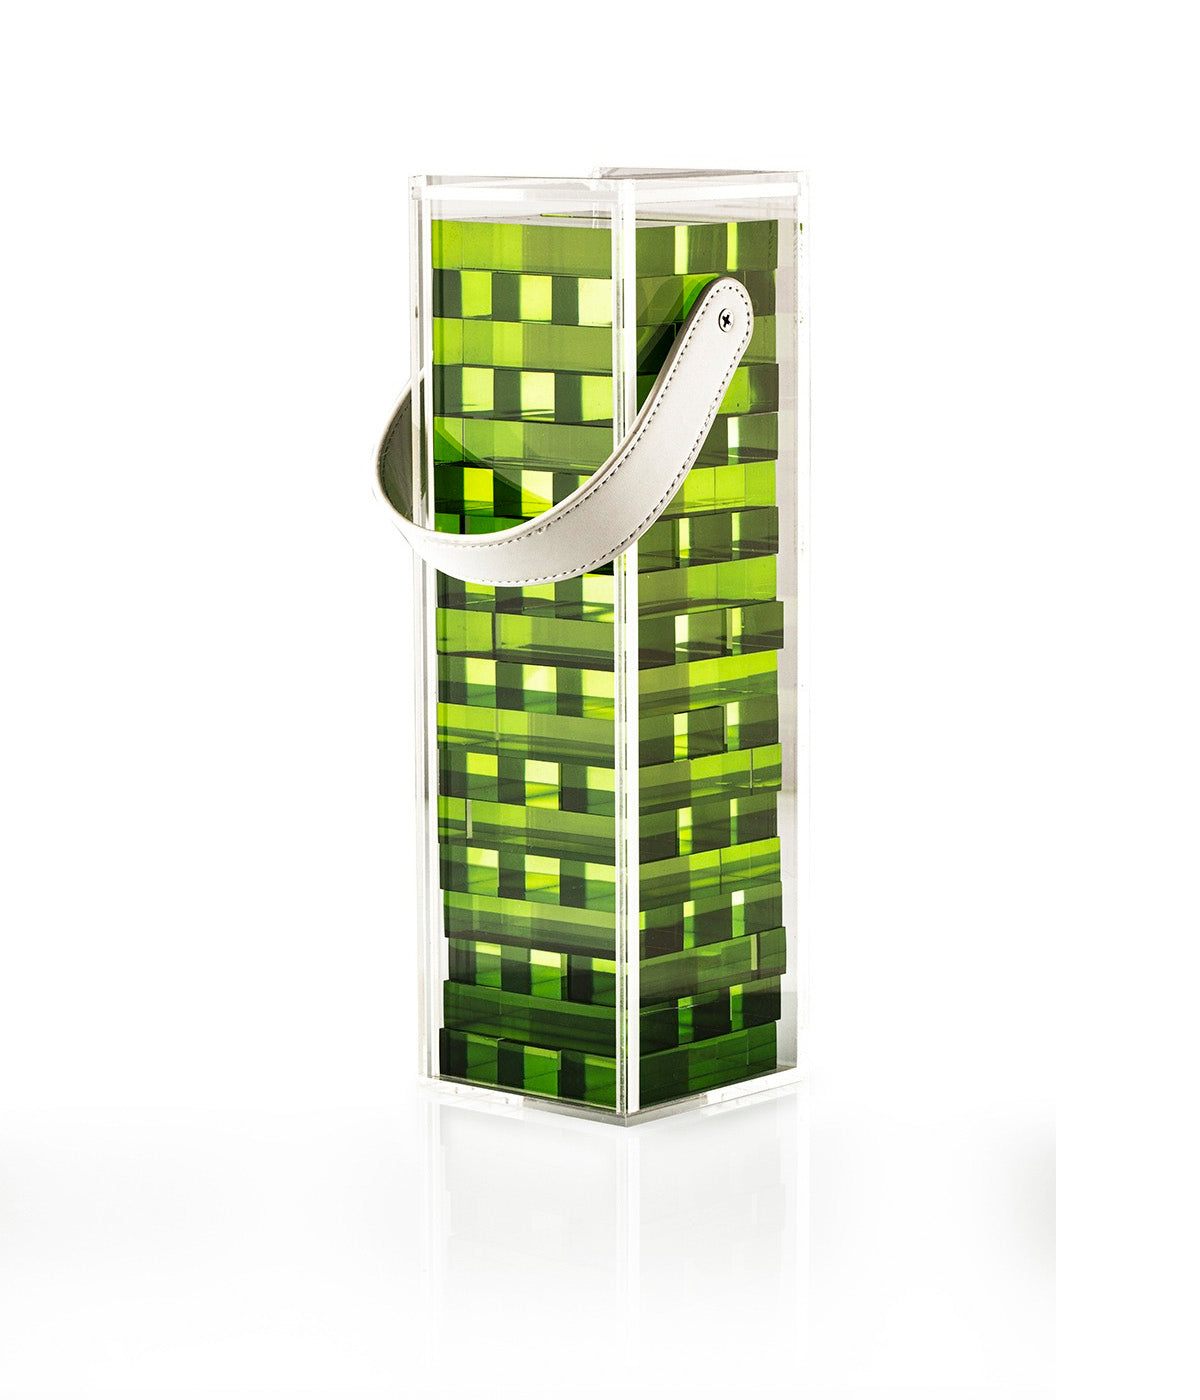 Acrylic Tumbler Tower Set in Green